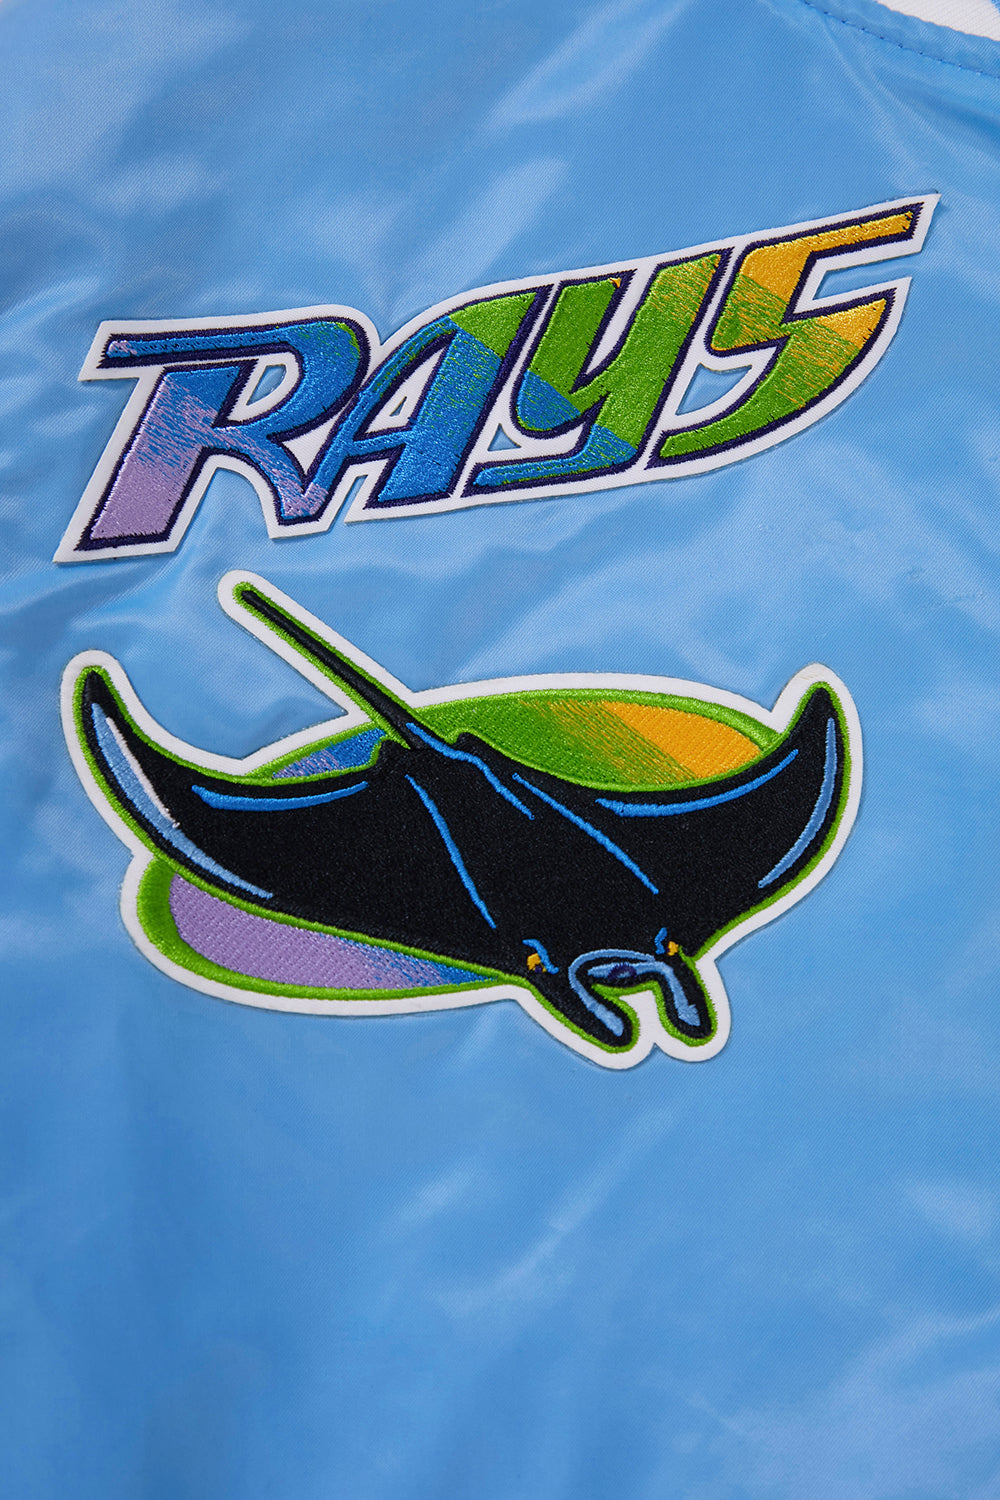 Tampa Bay Devil Rays Vintage MLB Crewneck Sweatshirt Navy / M